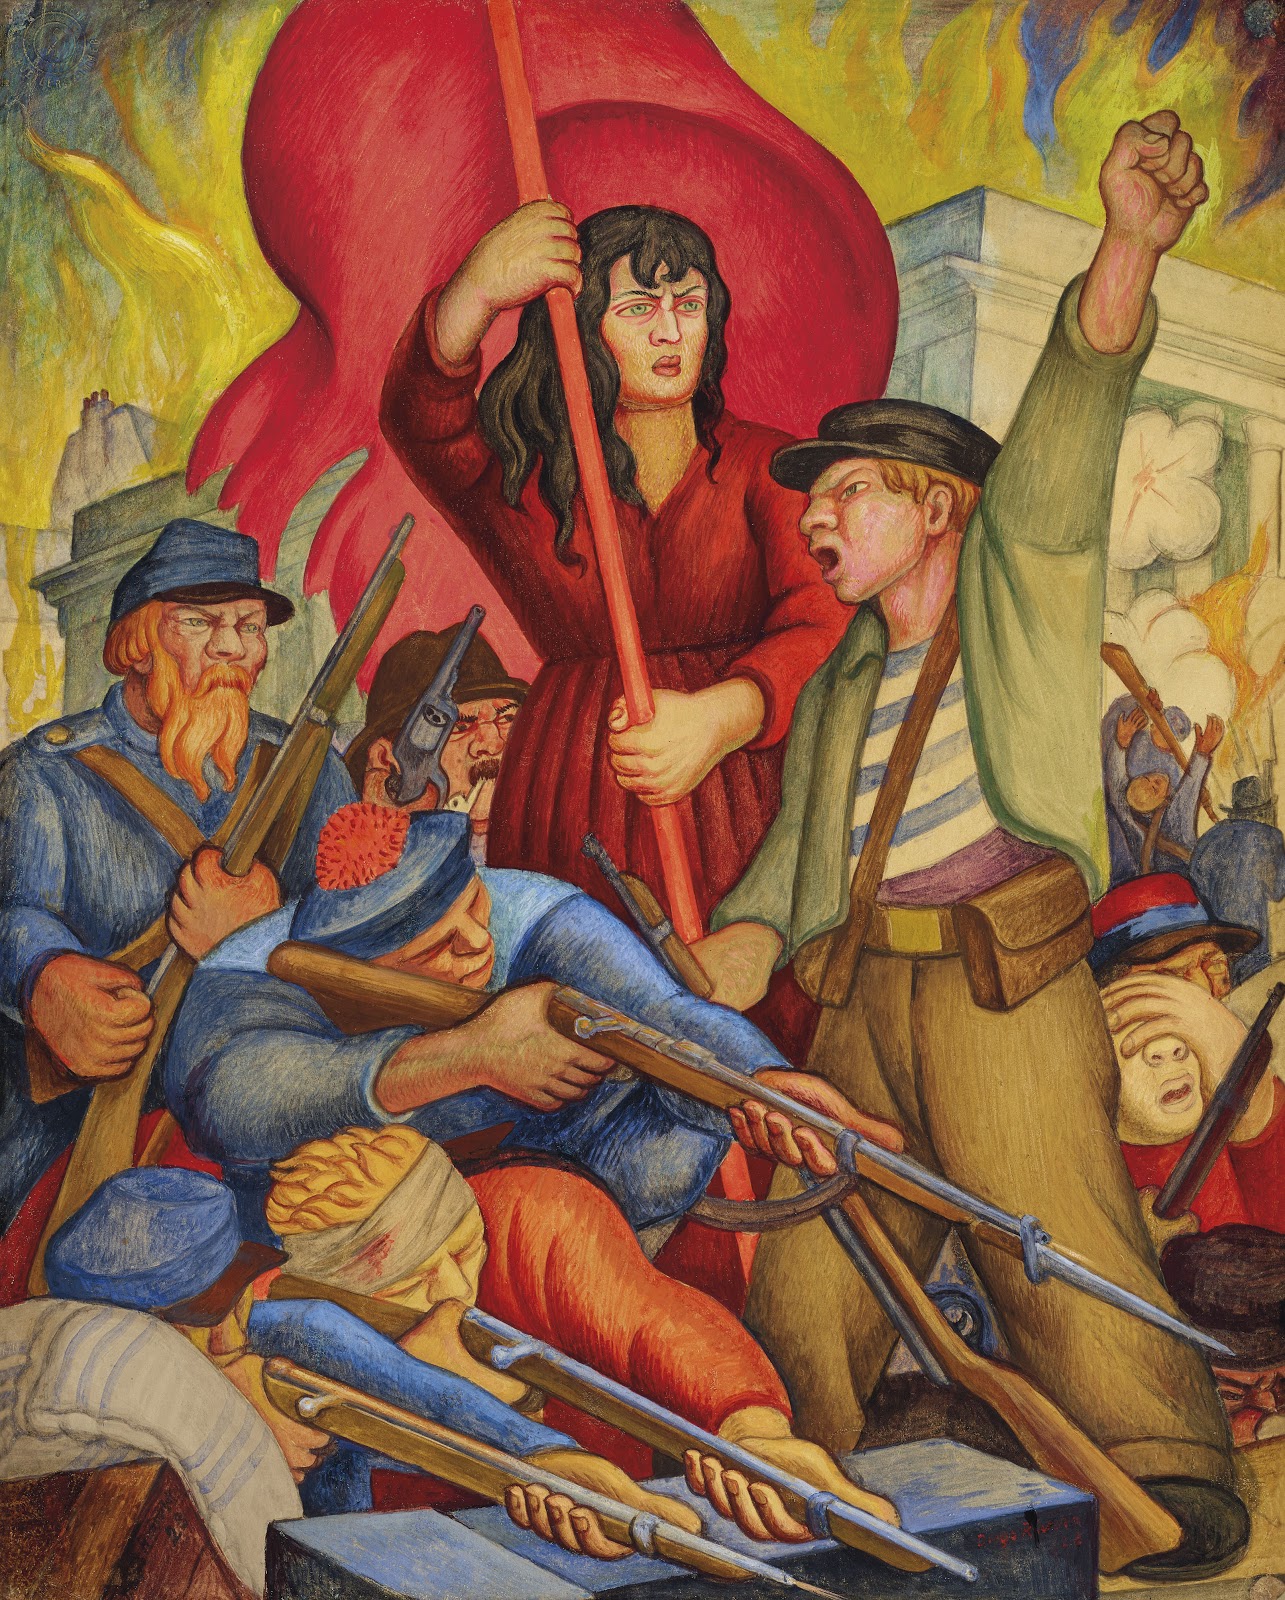 Diego+Rivera-1886-1957 (5).jpg